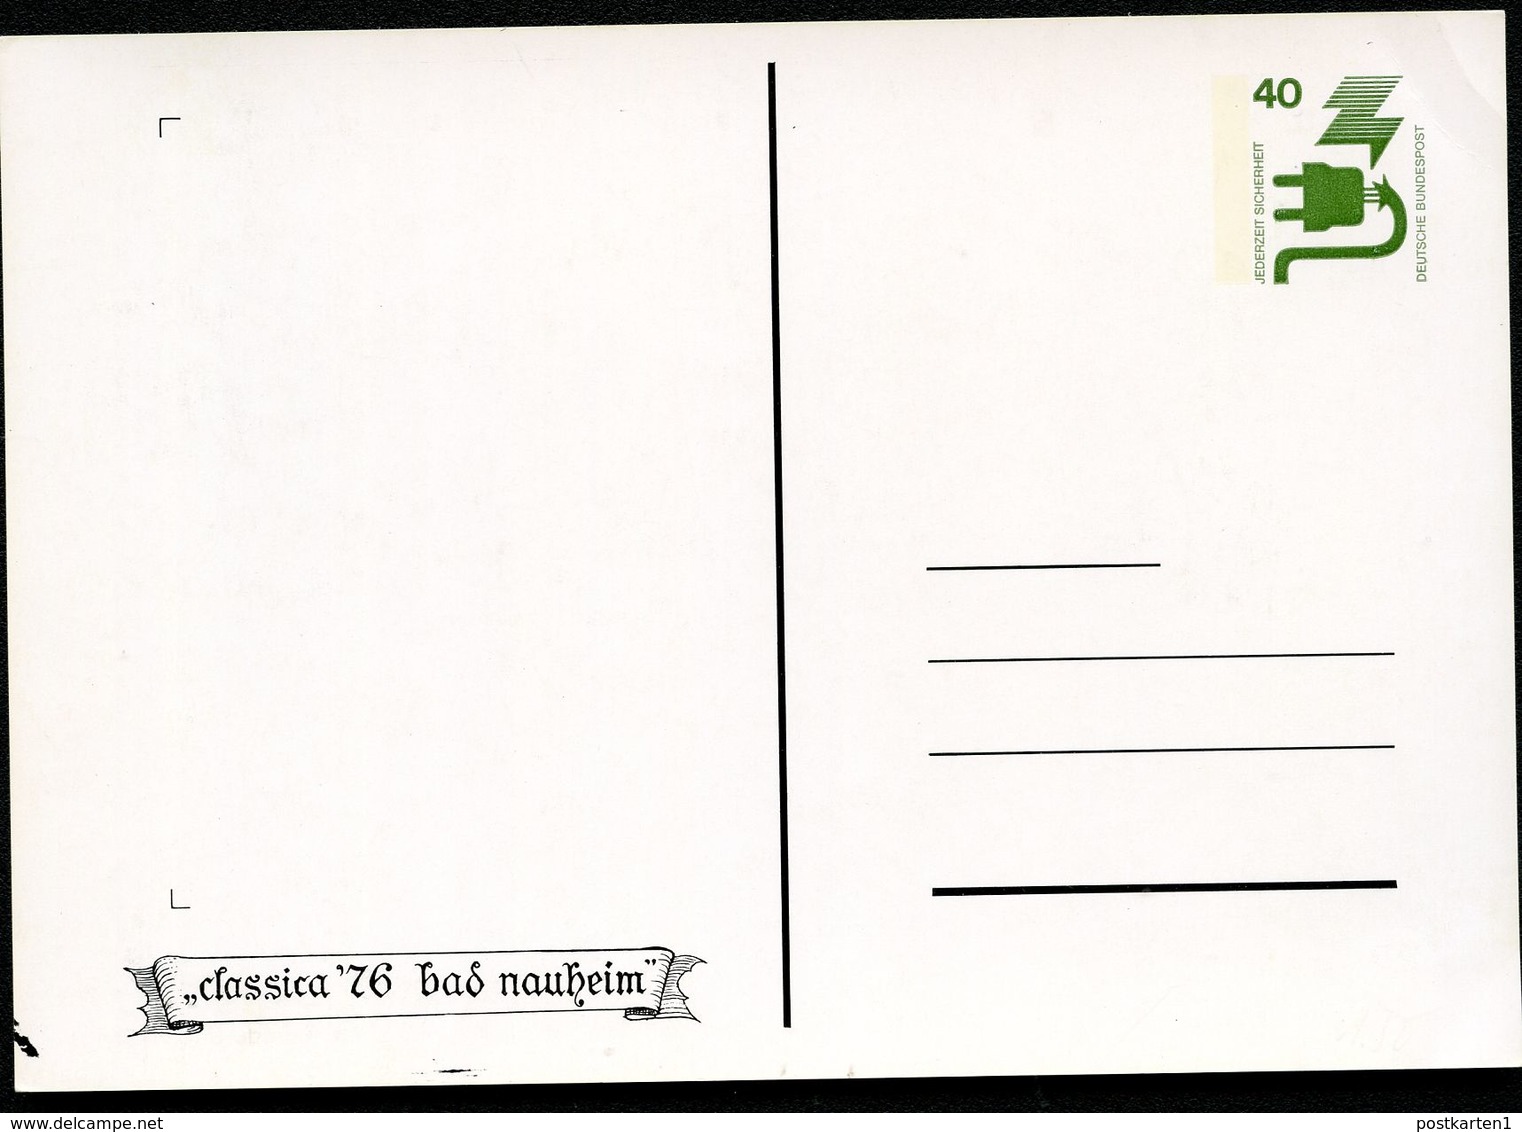 Bund PP69 C2/001 BAD NAUHEIM GROSSER SPRUDEL 1854  NGK 3,00 € - Private Postcards - Mint